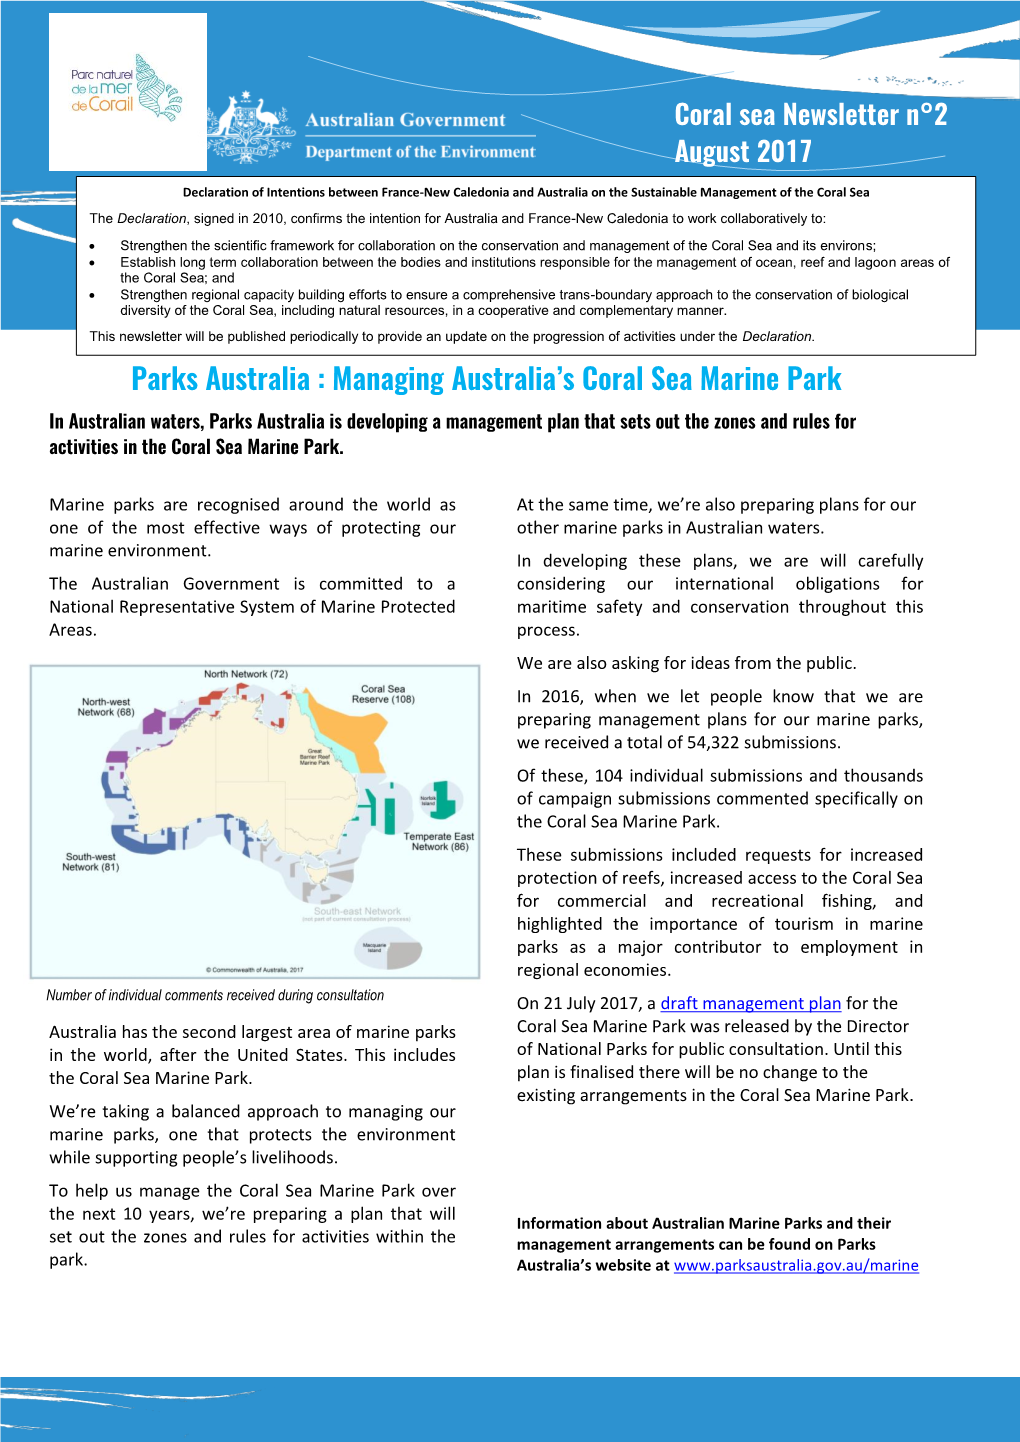 Parks Australia : Managing Australia's Coral Sea Marine Park